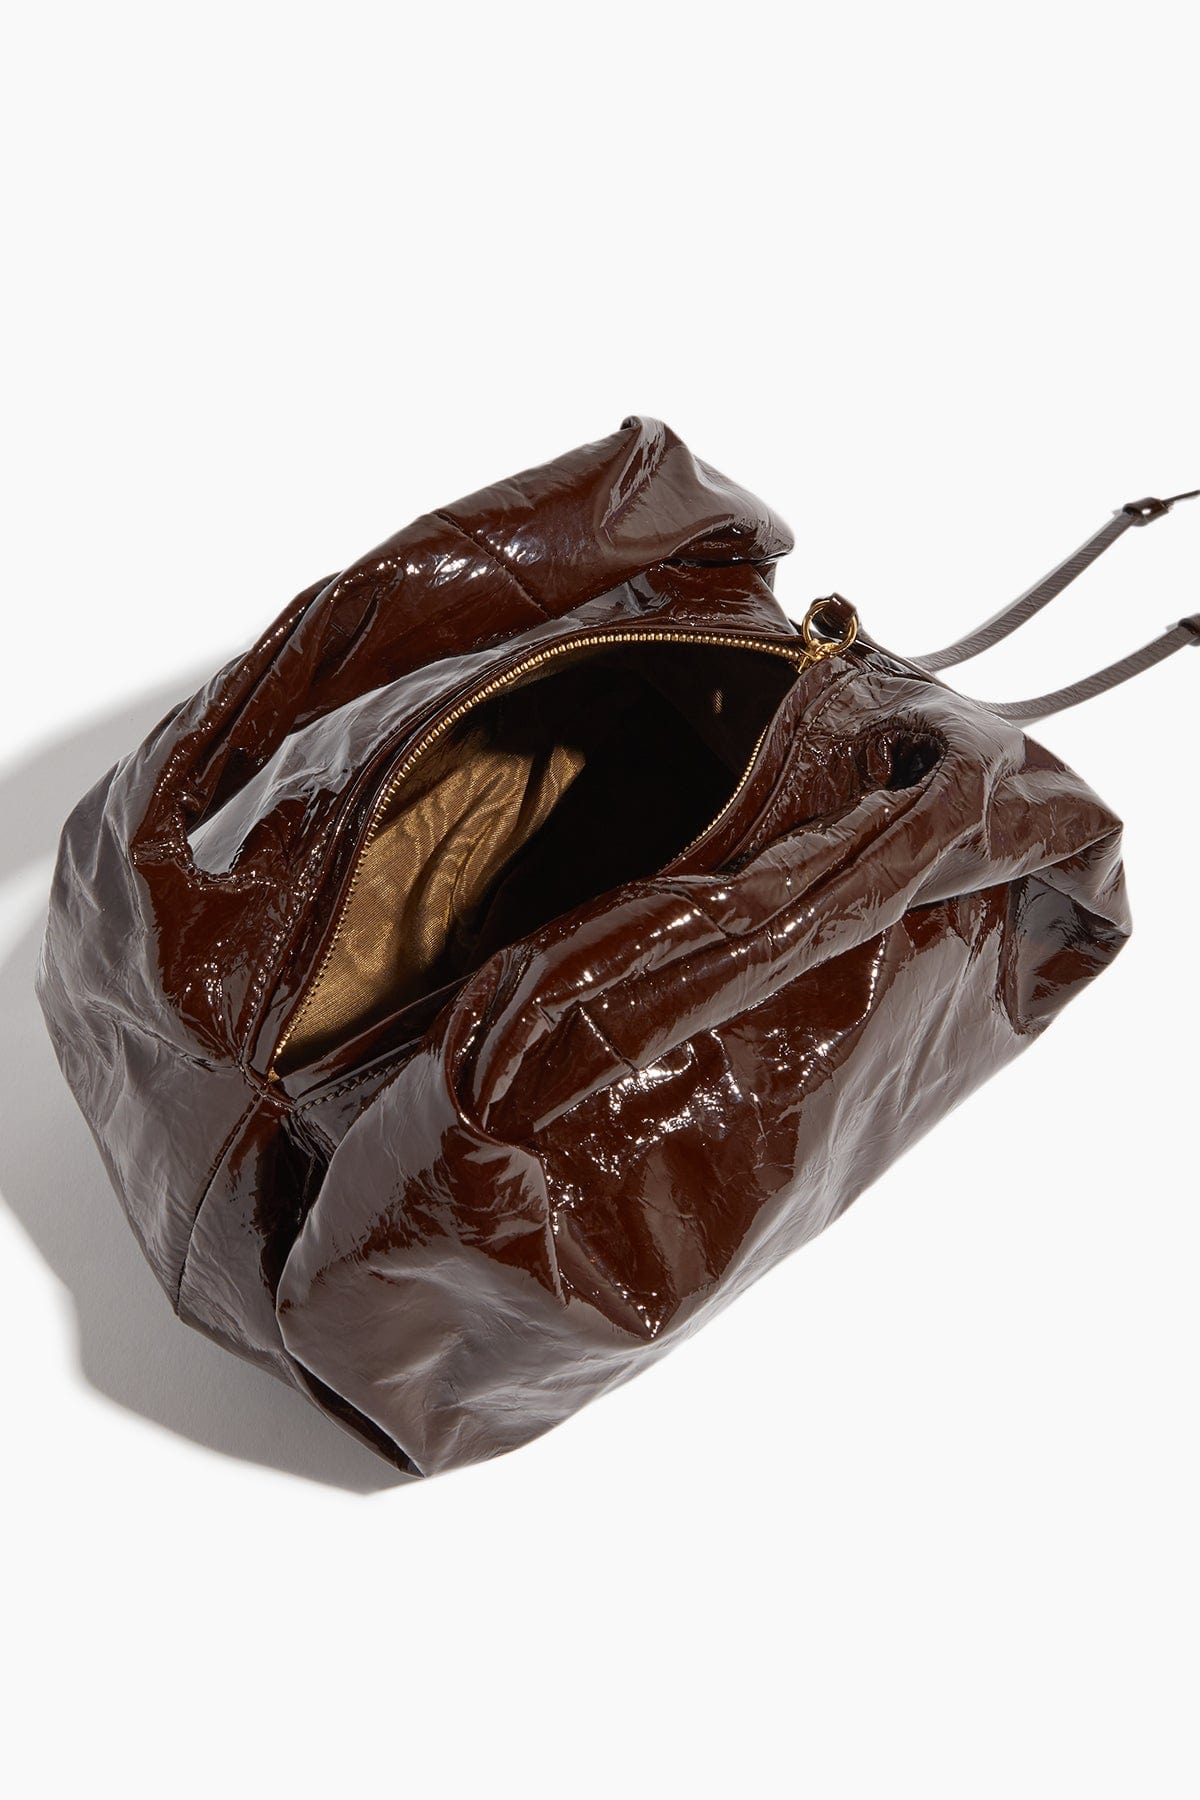 Dries Van Noten Top Handle Bags Tote Bag in Dark Brown Dries Van Noten Tote Bag in Dark Brown